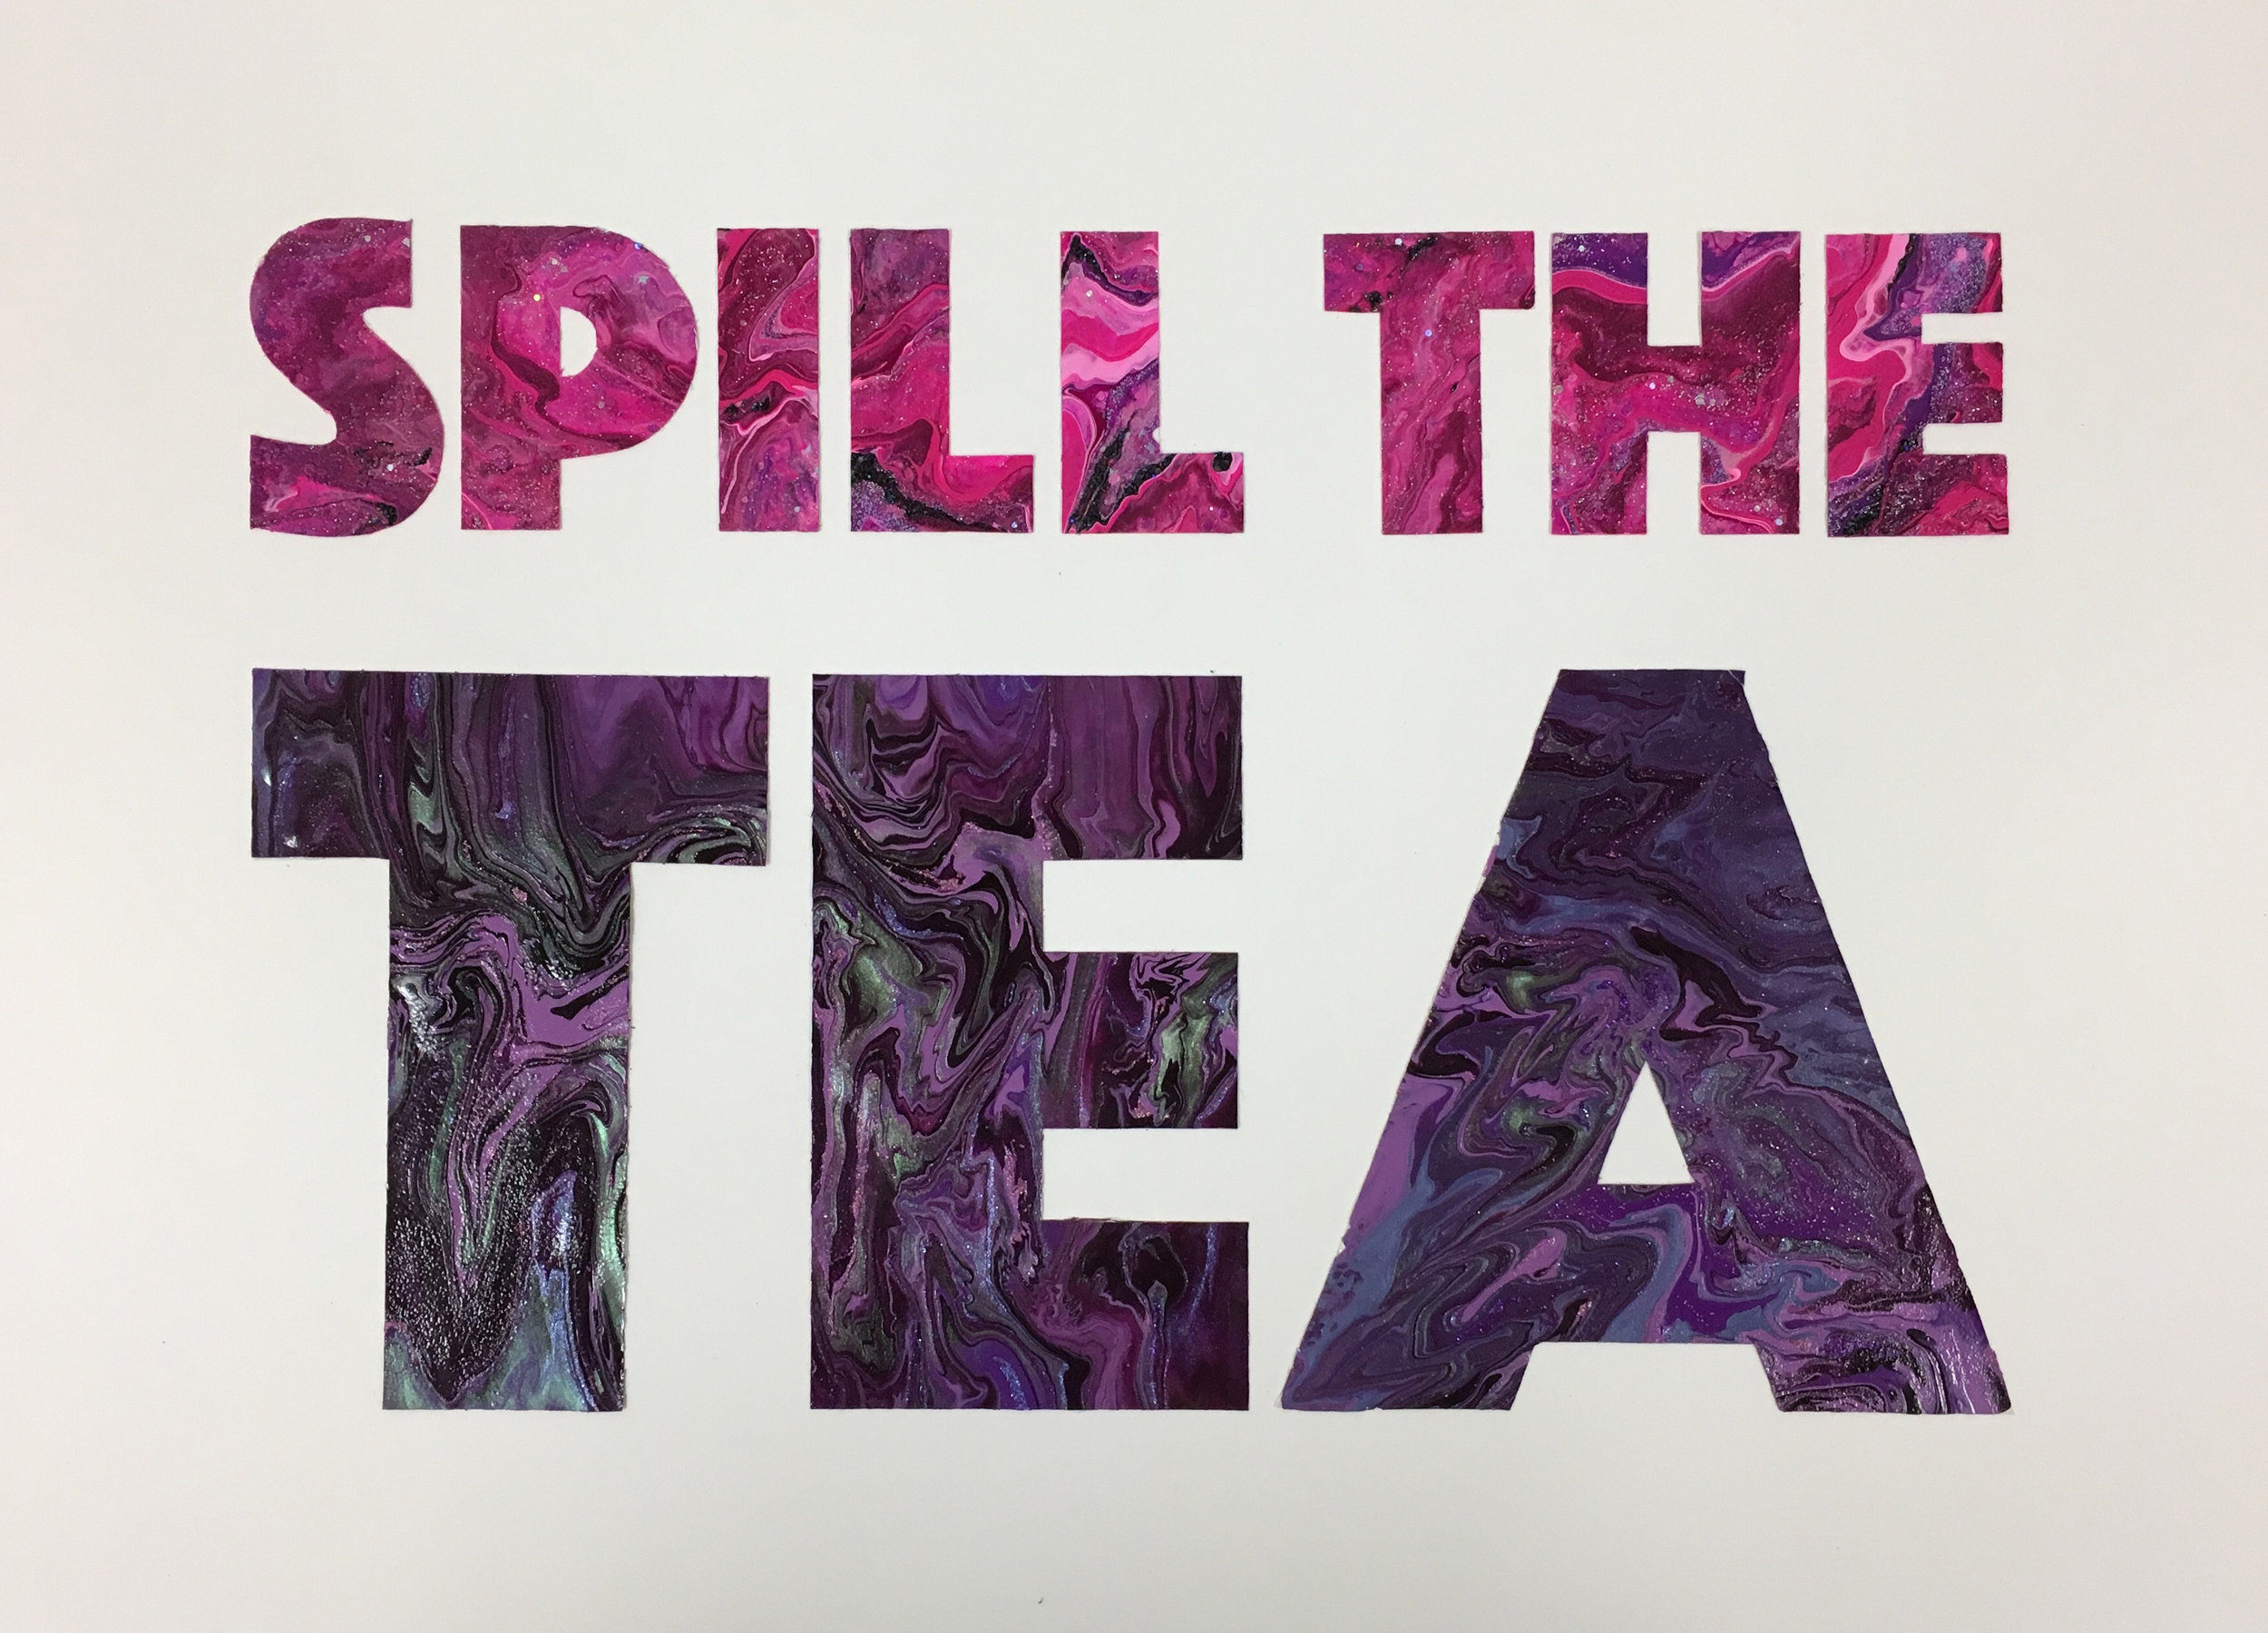 Spill the Tea